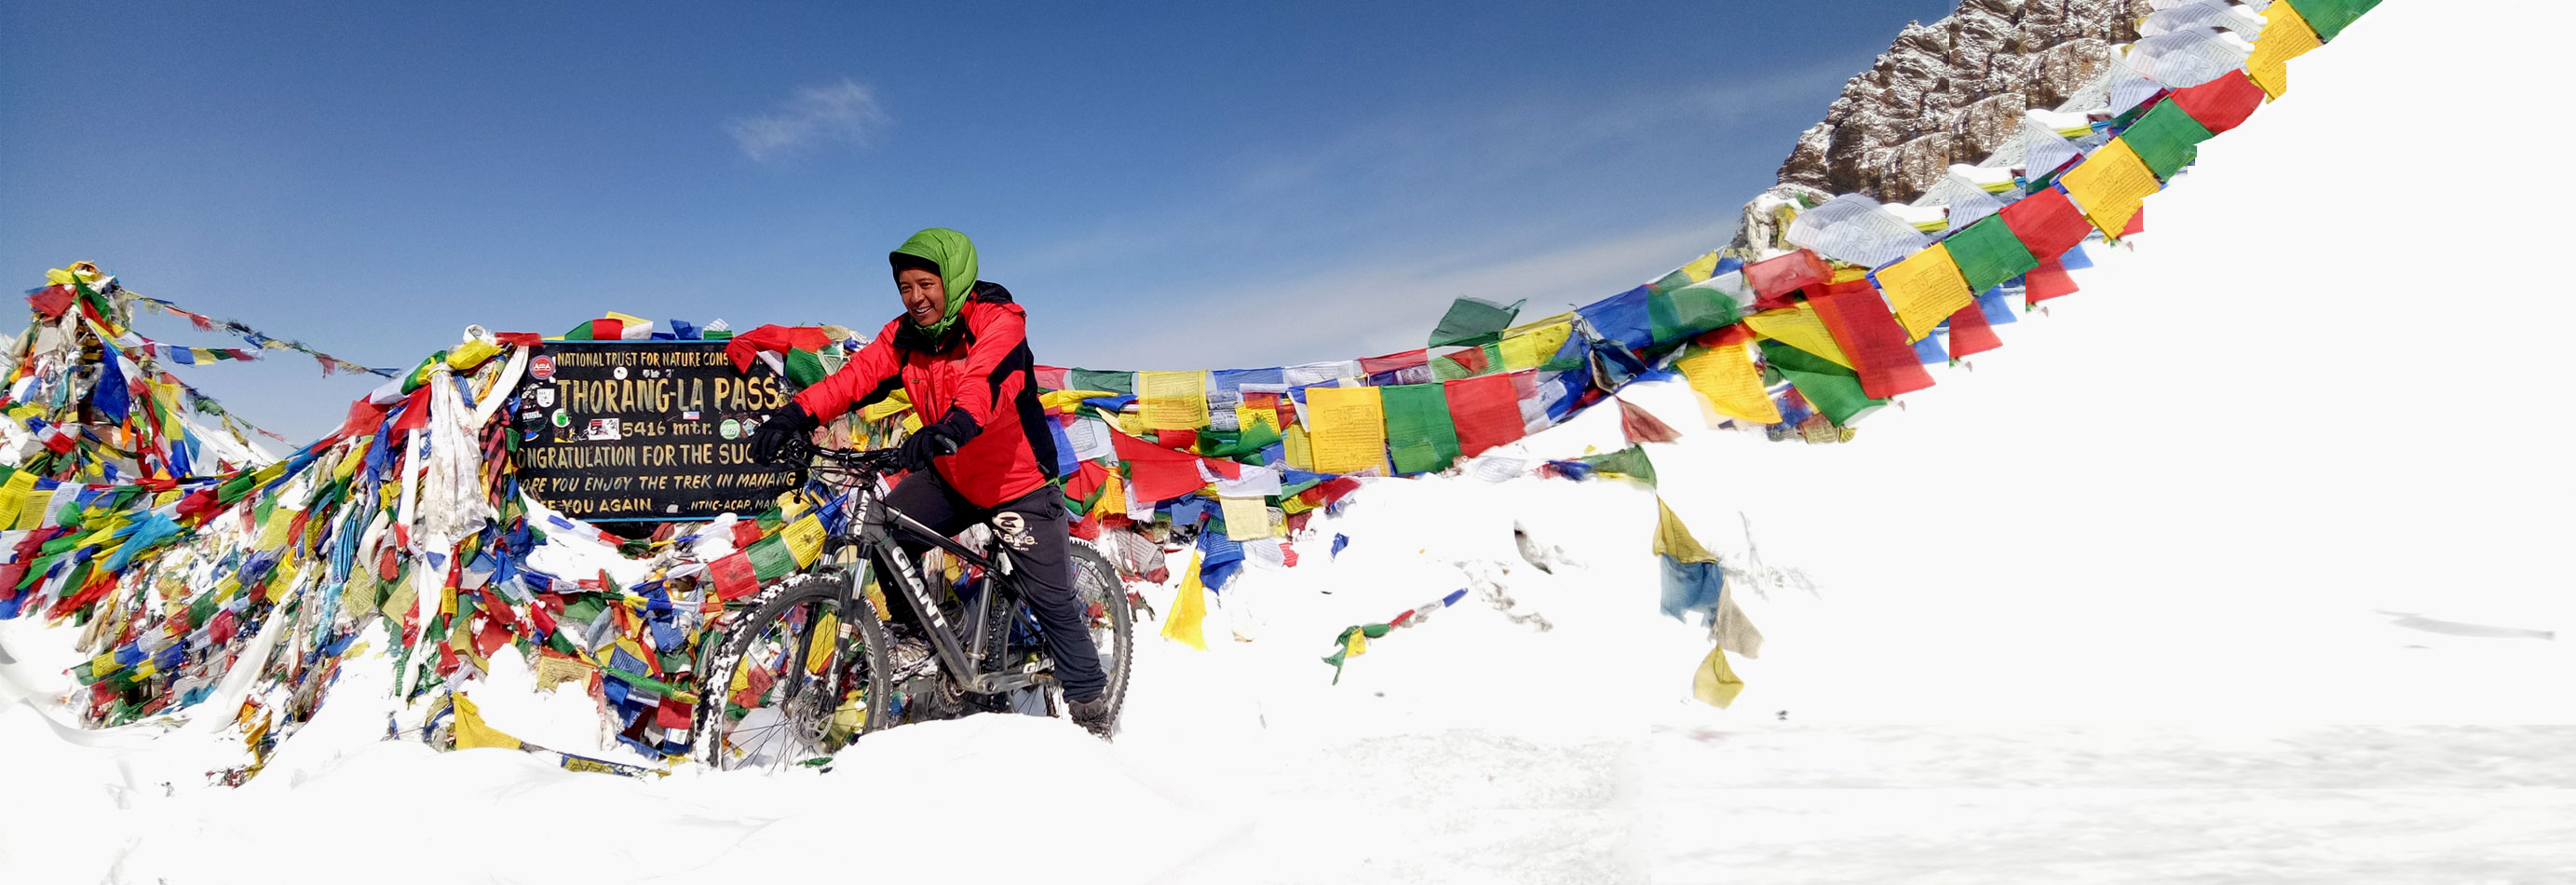 Trekking Experts, Best Trekking Agency in Nepal